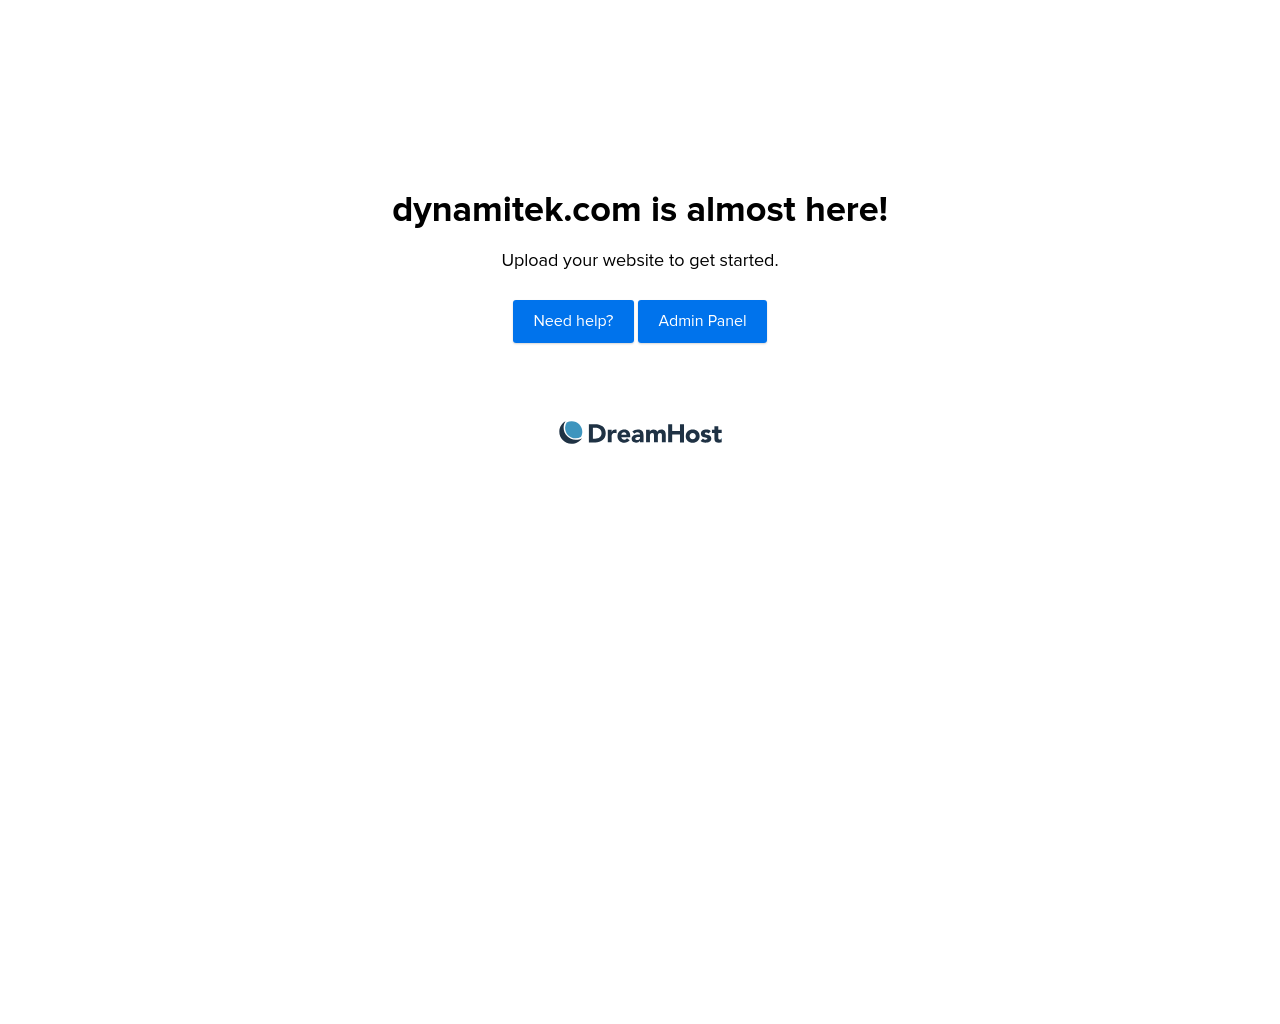 dynamitek.com